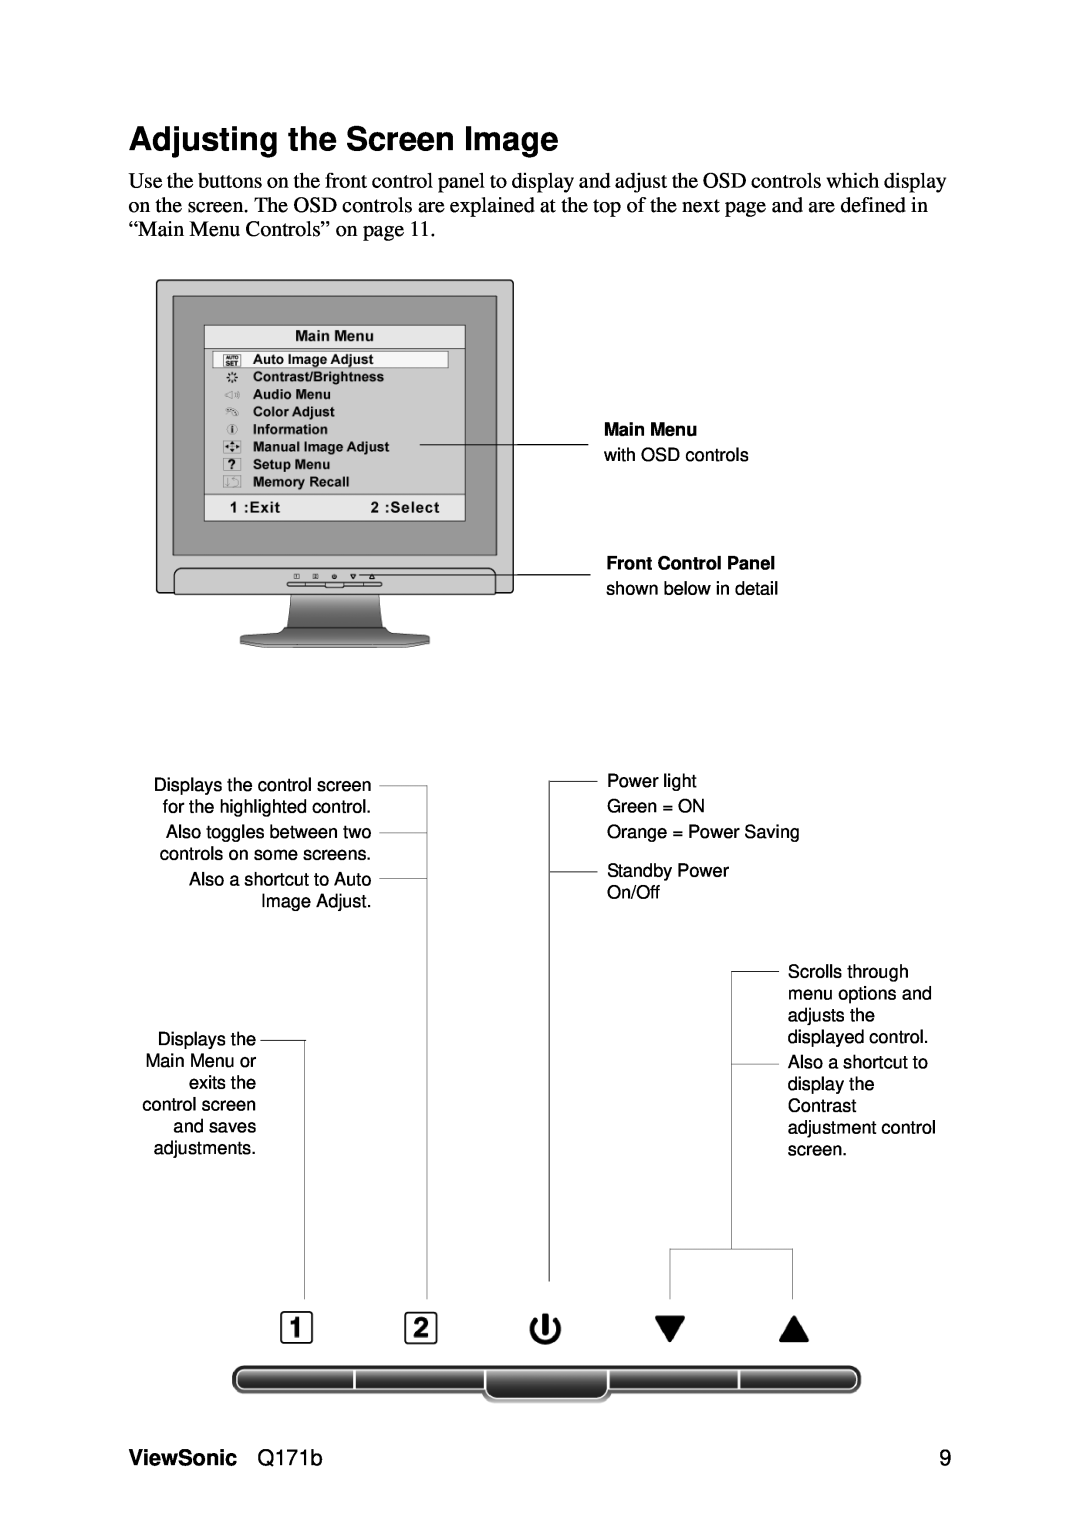 ViewSonic VS11351 manual Adjusting the Screen Image, ViewSonic Q171b, Main Menu, Front Control Panel 